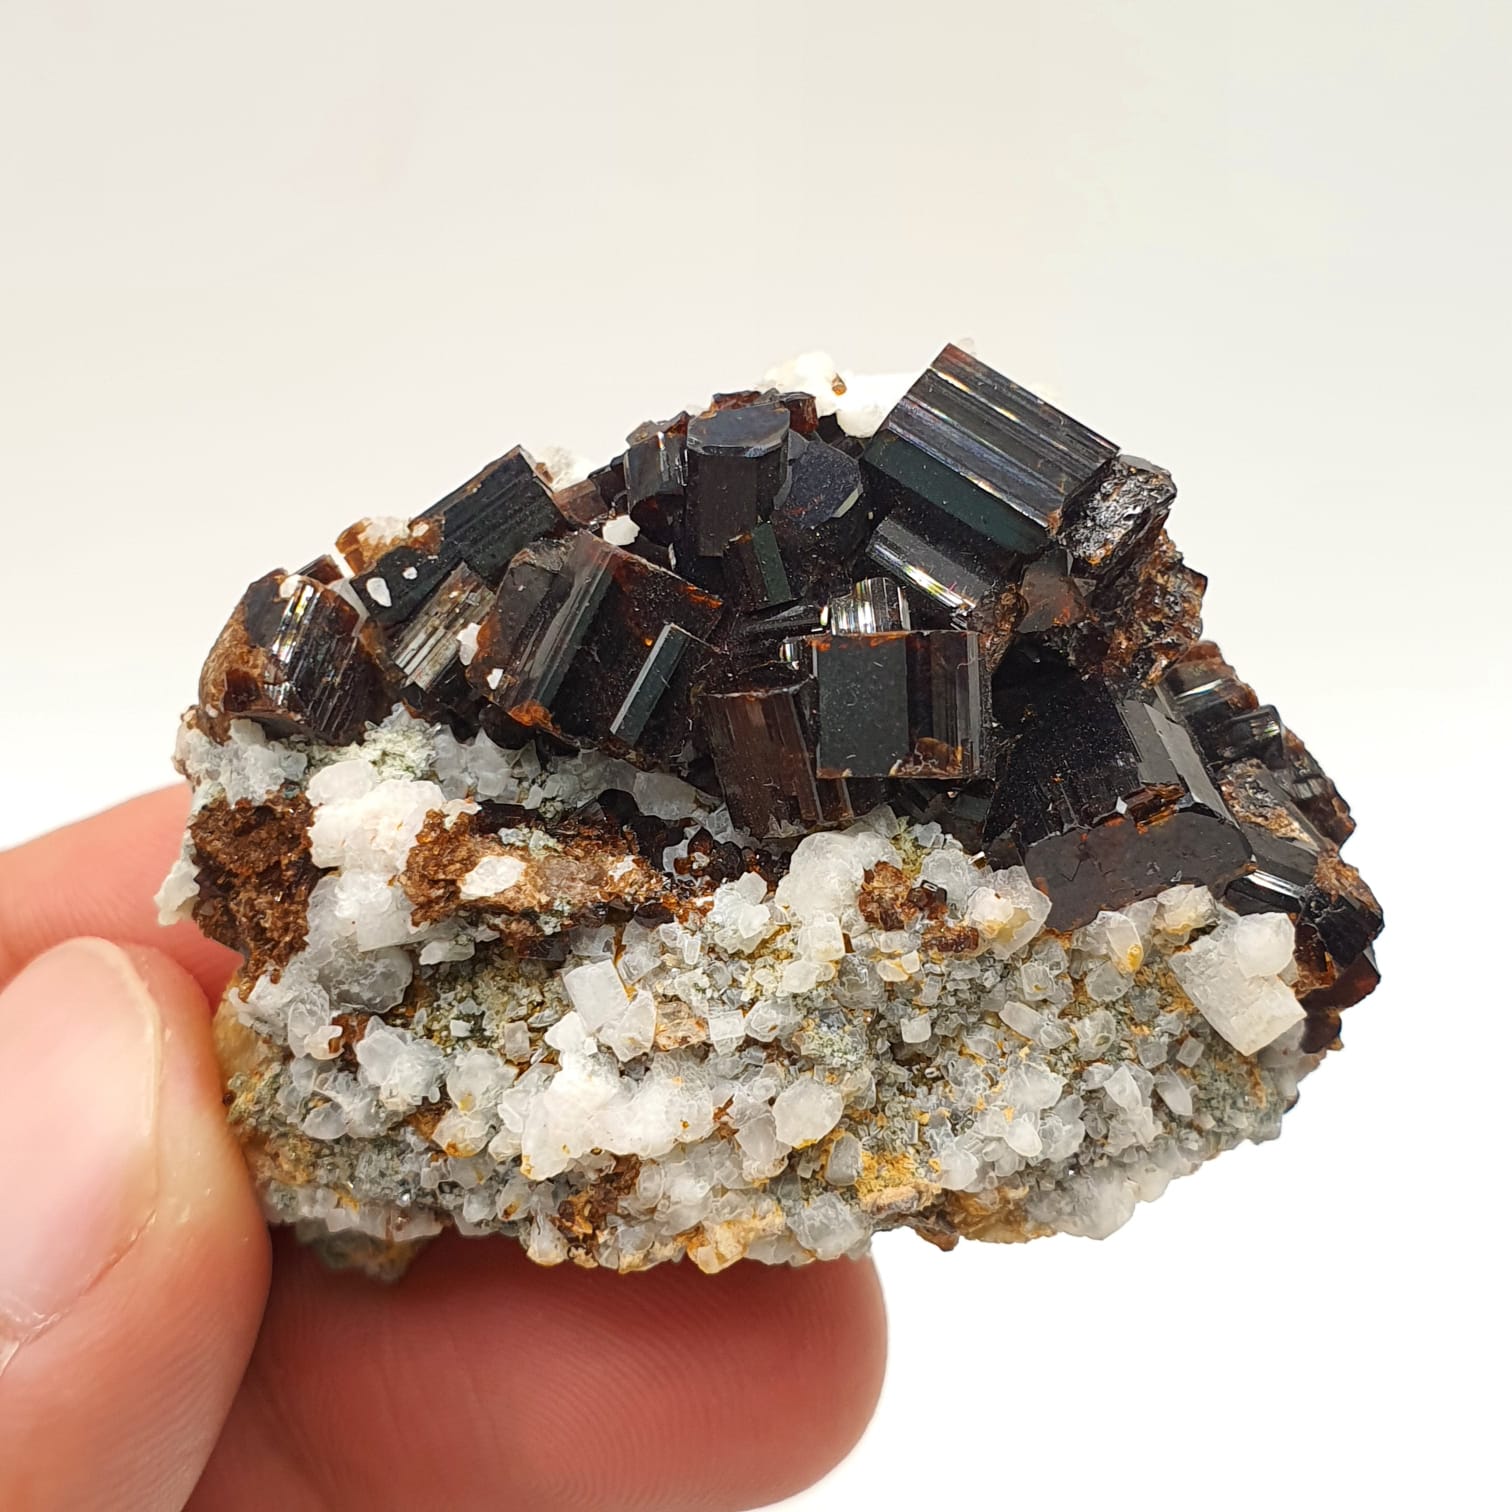 Luster Intergrown Crystals Of Vesuvianite On Contrasting White Matrix